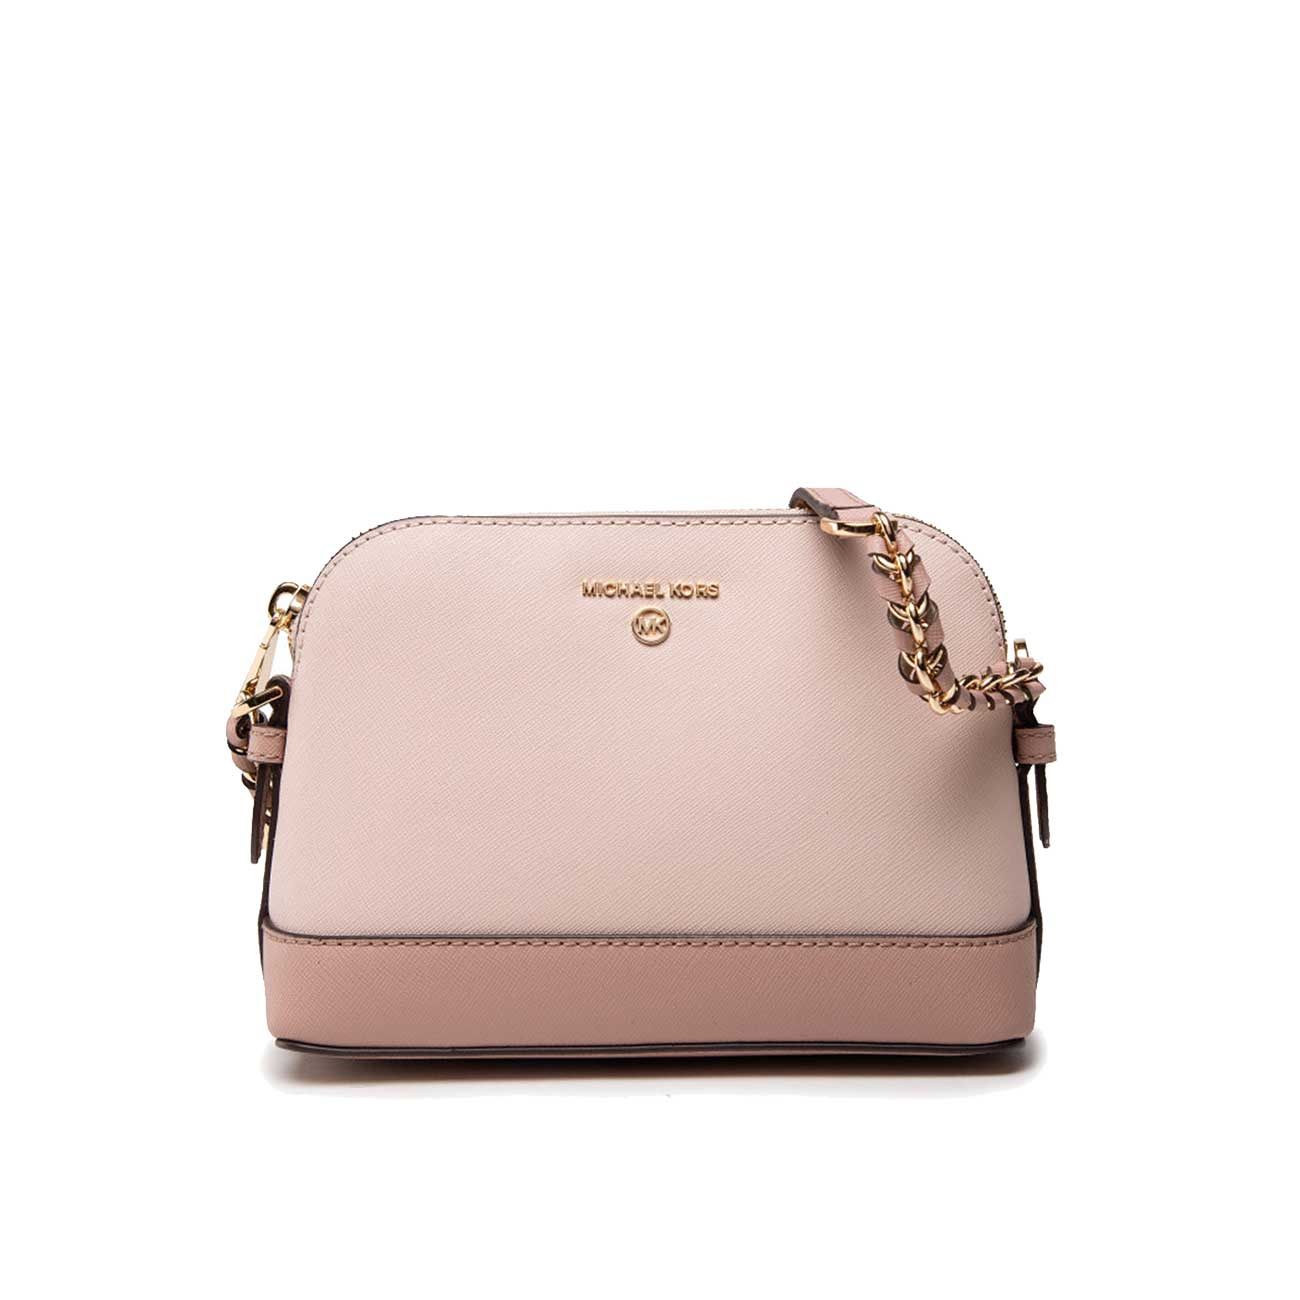 Michael Kors Soft Pink Small Bradshaw Shoulder Bag